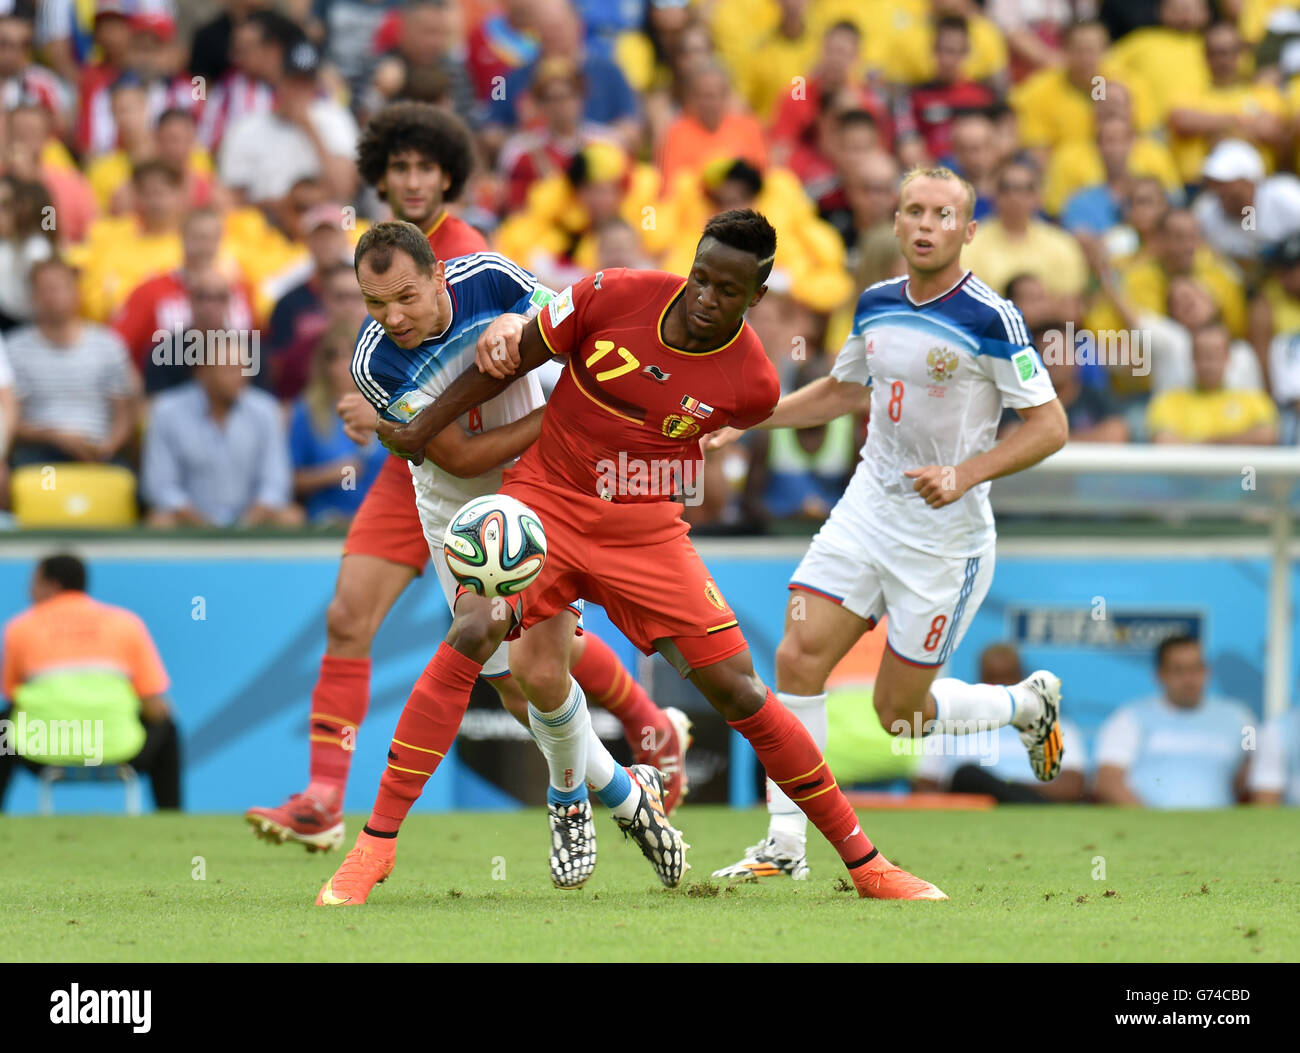 Soccer - FIFA World Cup 2014 - Group H - Belgium v Russia - Maracana. Russia's Sergei Ignashevich battles for the ball with Belgium's Divock Origi Stock Photo